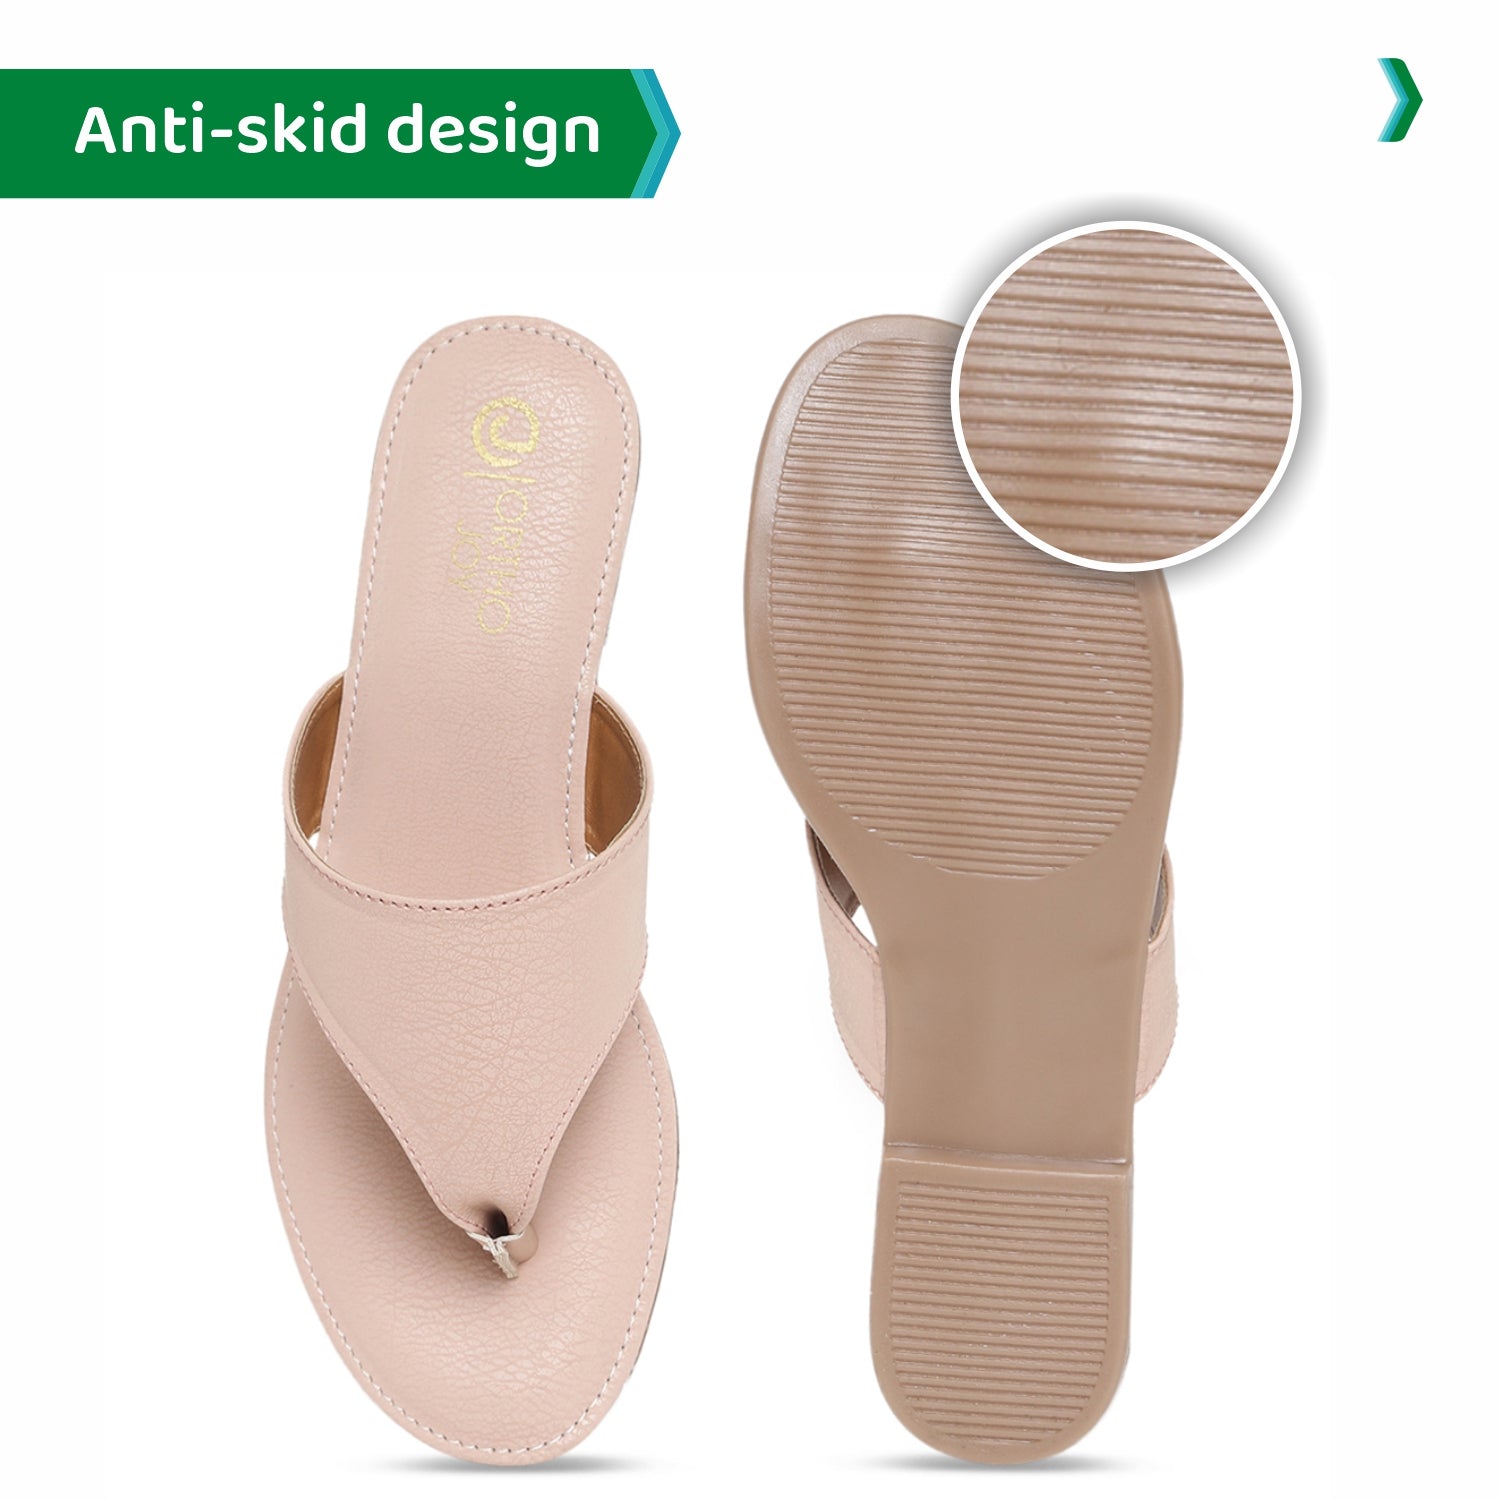 ORTHO JOY Fancy doctor Stylish slippers for women